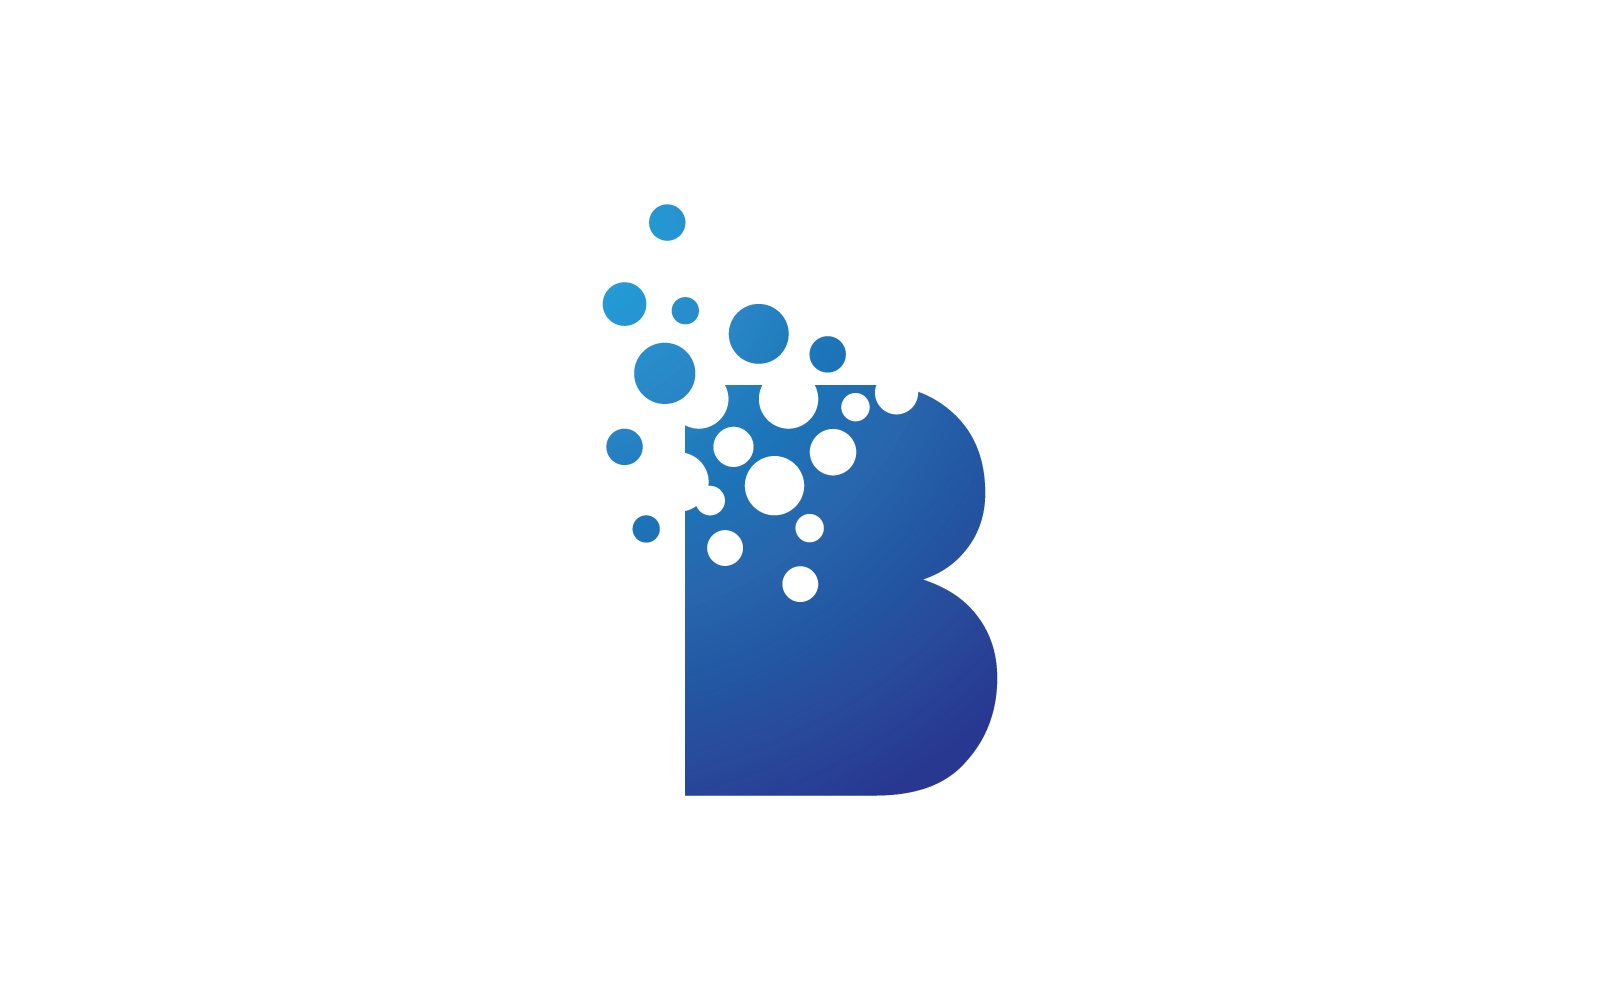 B letter pixel logo vector flat design